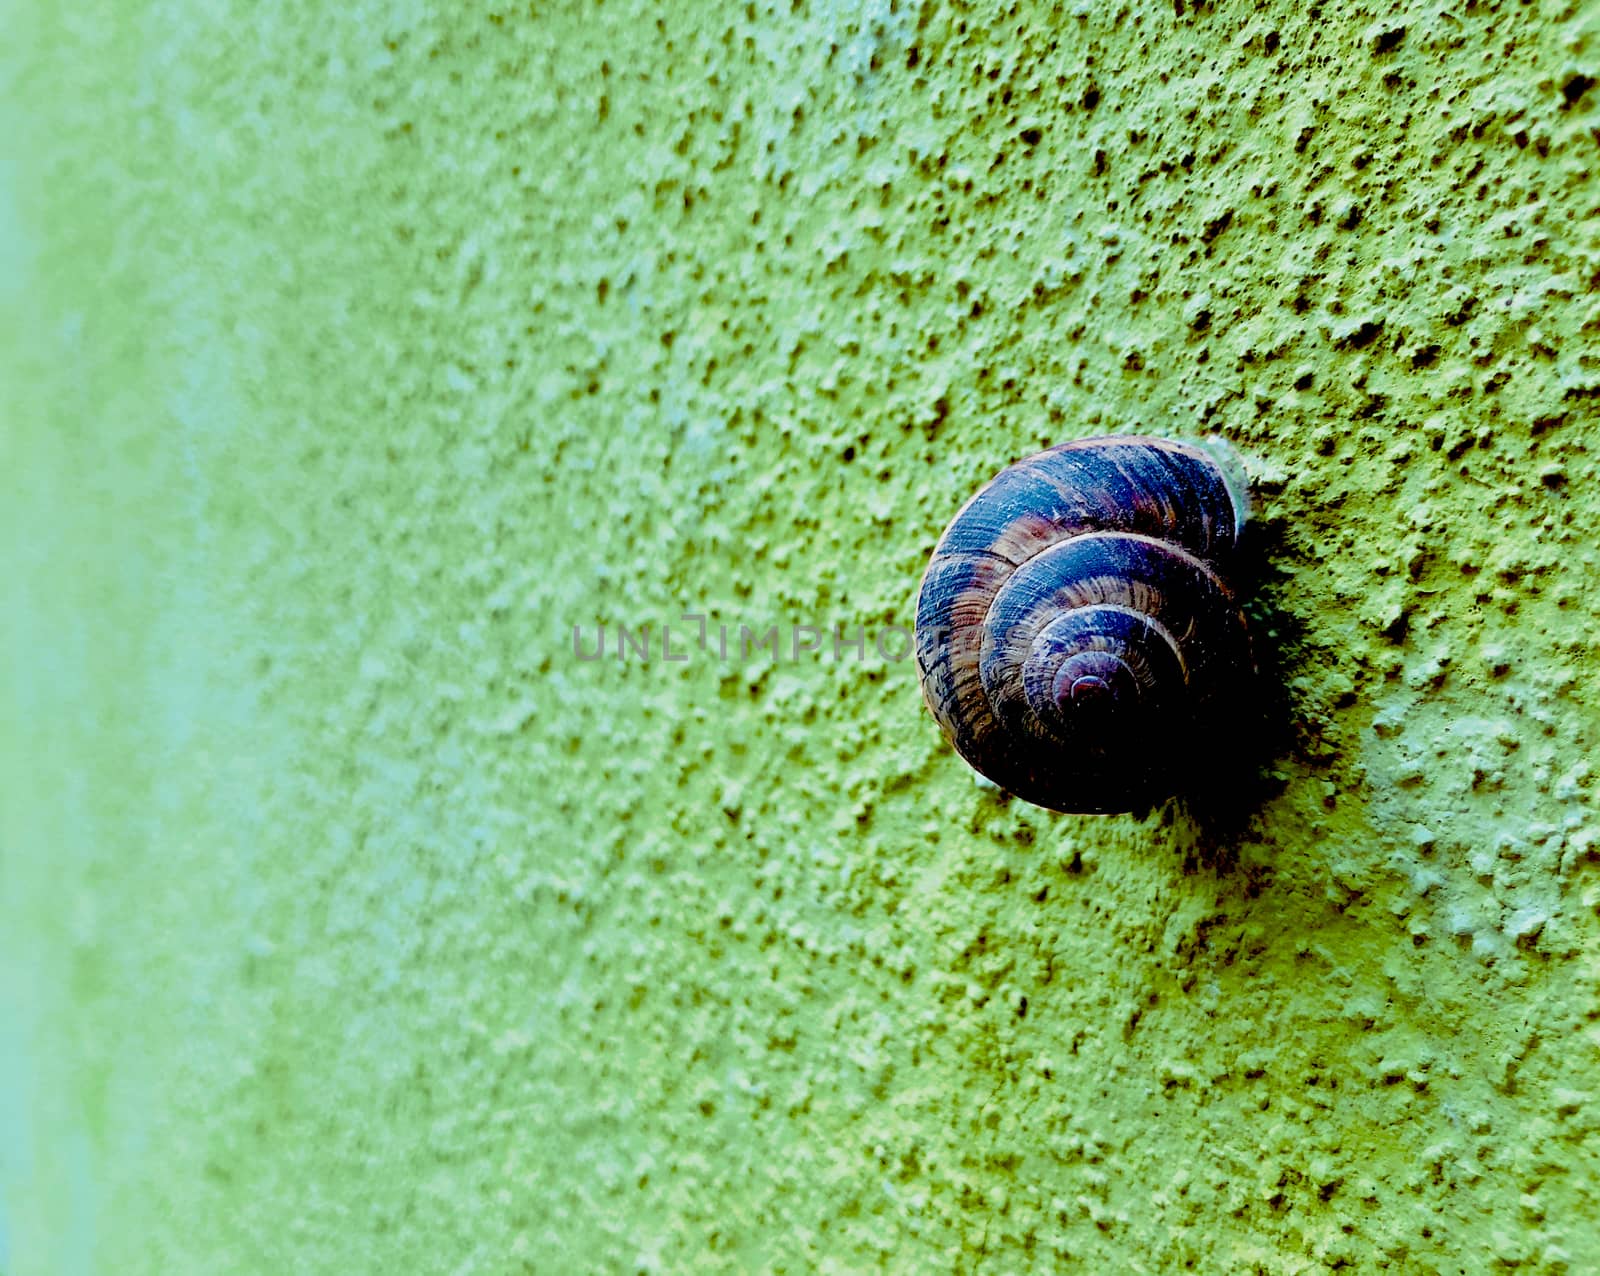 snail on a bumpy colorfull wall close up  by F1b0nacci